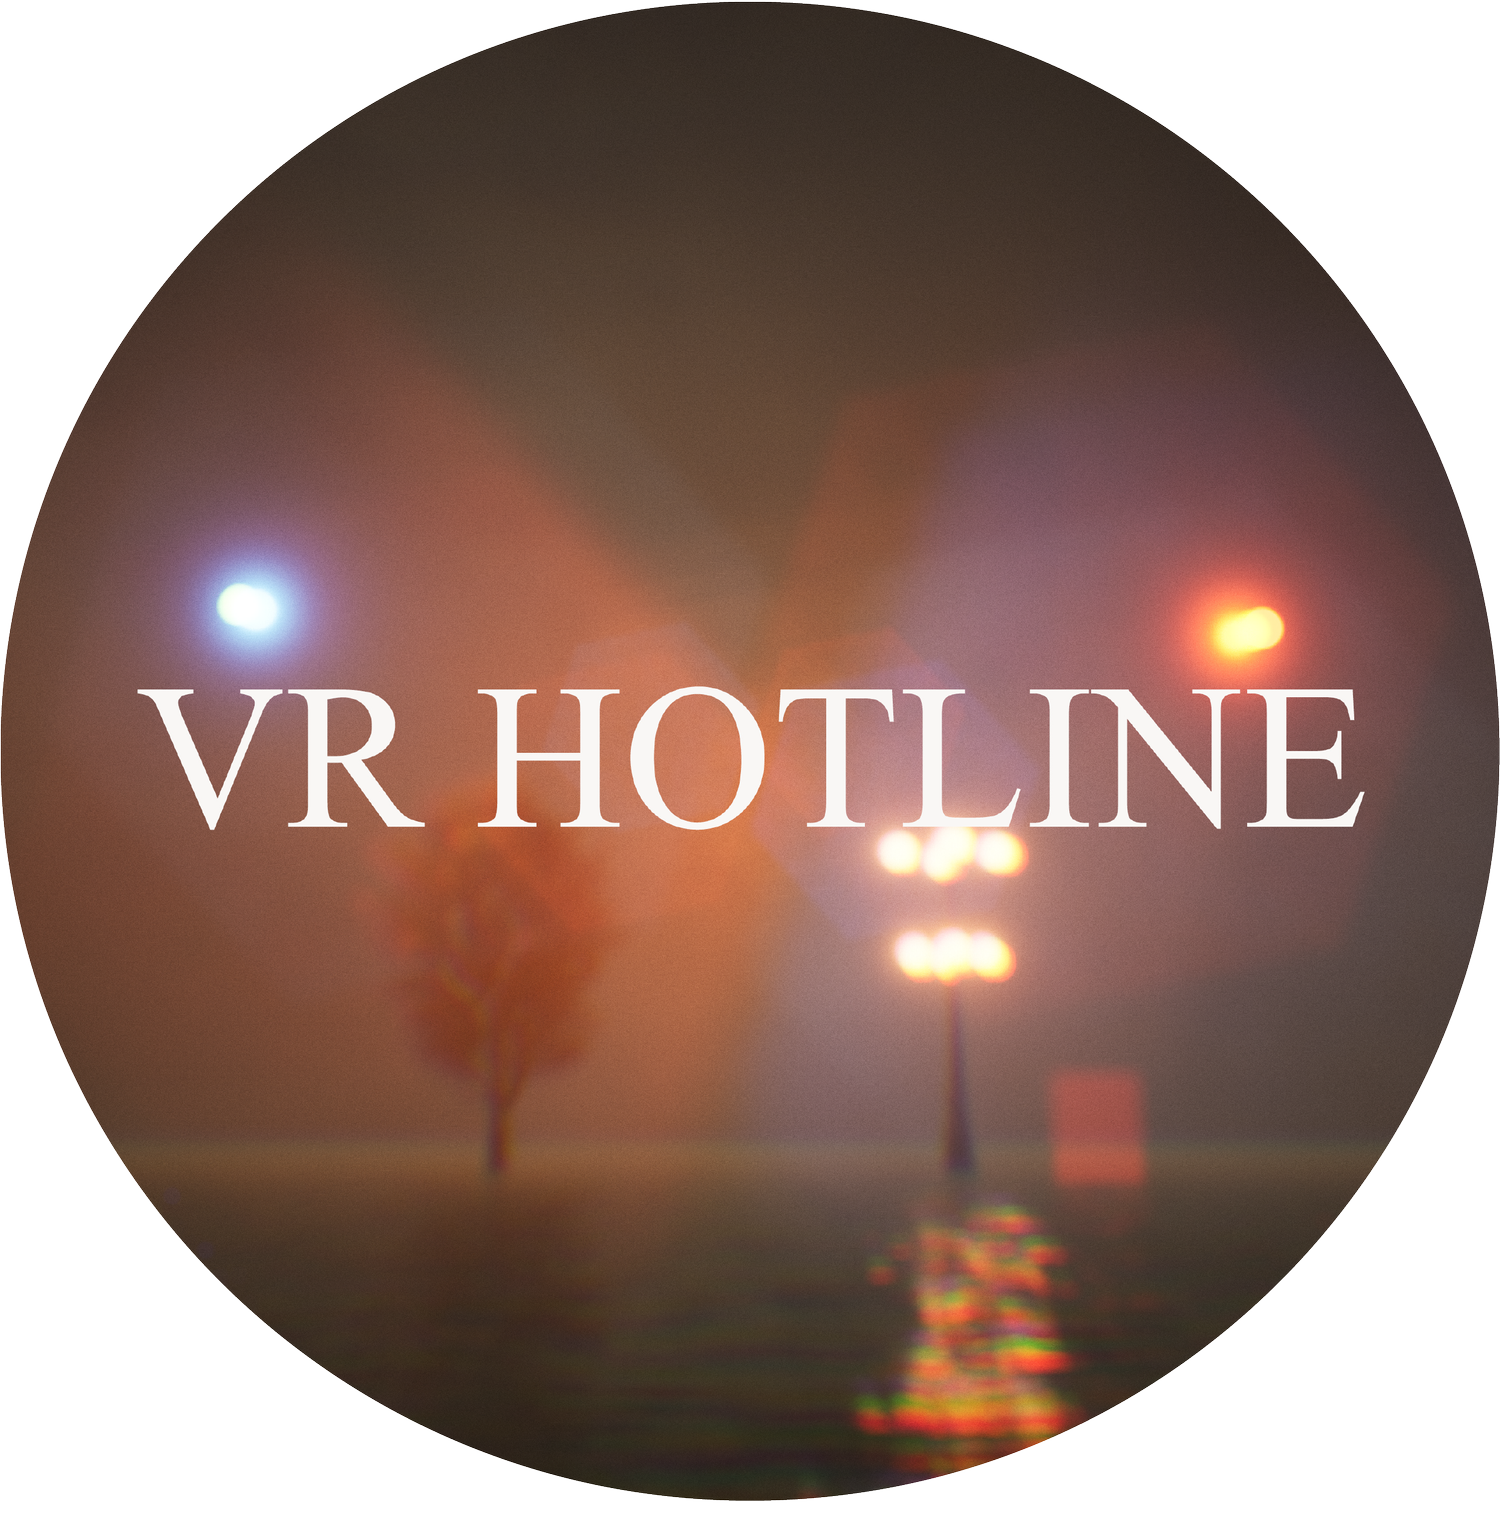 VR HOTLINE